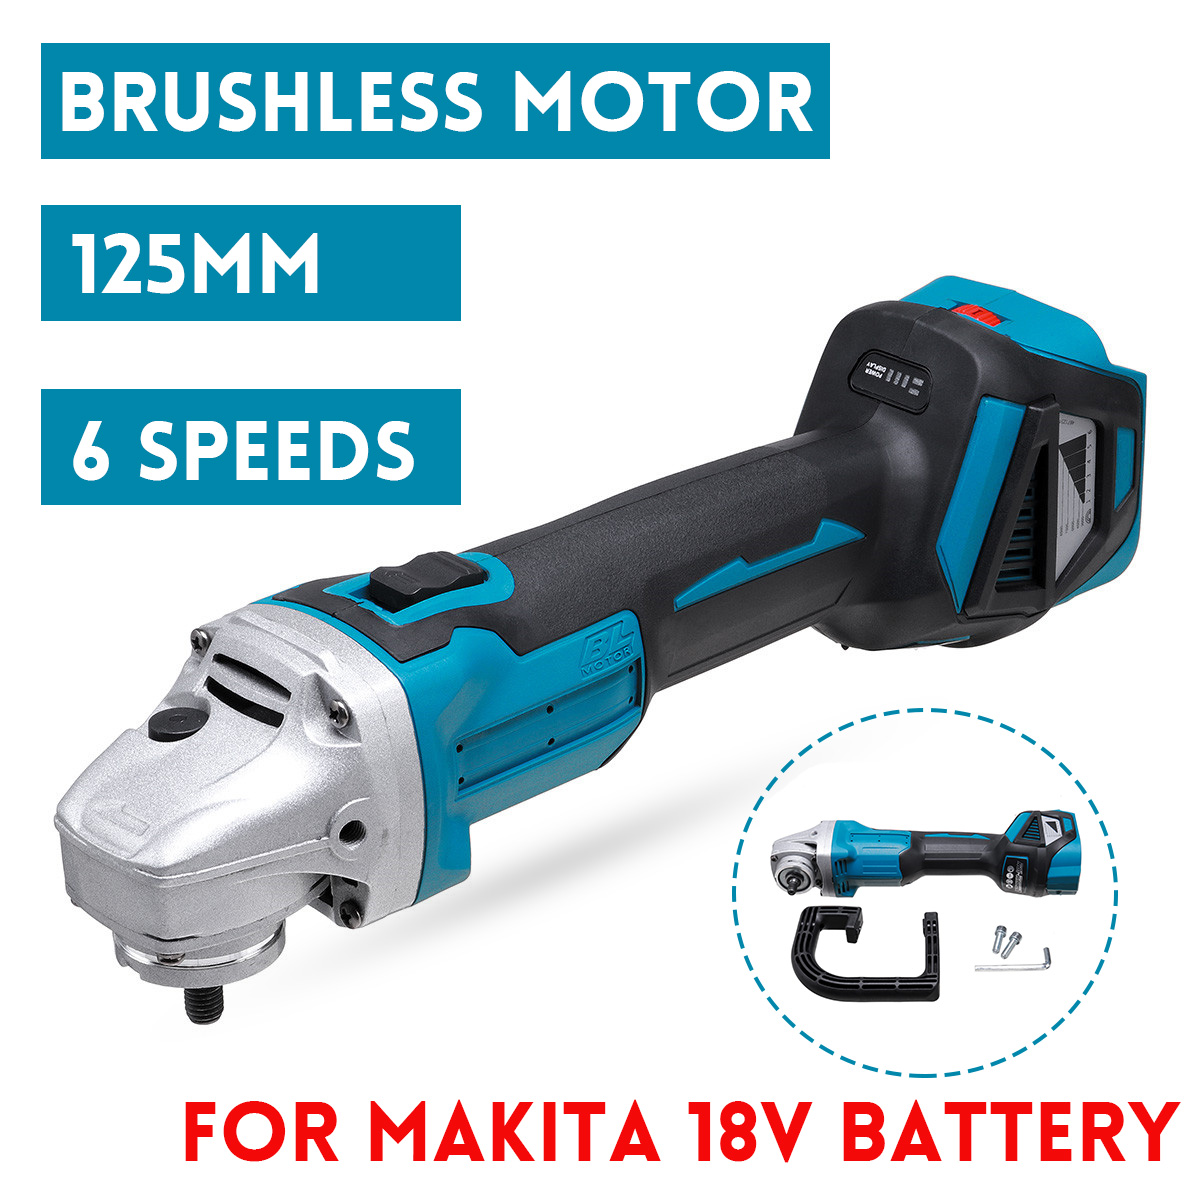 Brushless-Angle-Grinder-6-Speeds-Electric-Polishing-Grinding-Tool-For-Makita-18V-Battery--125mm-Grin-1876245-3